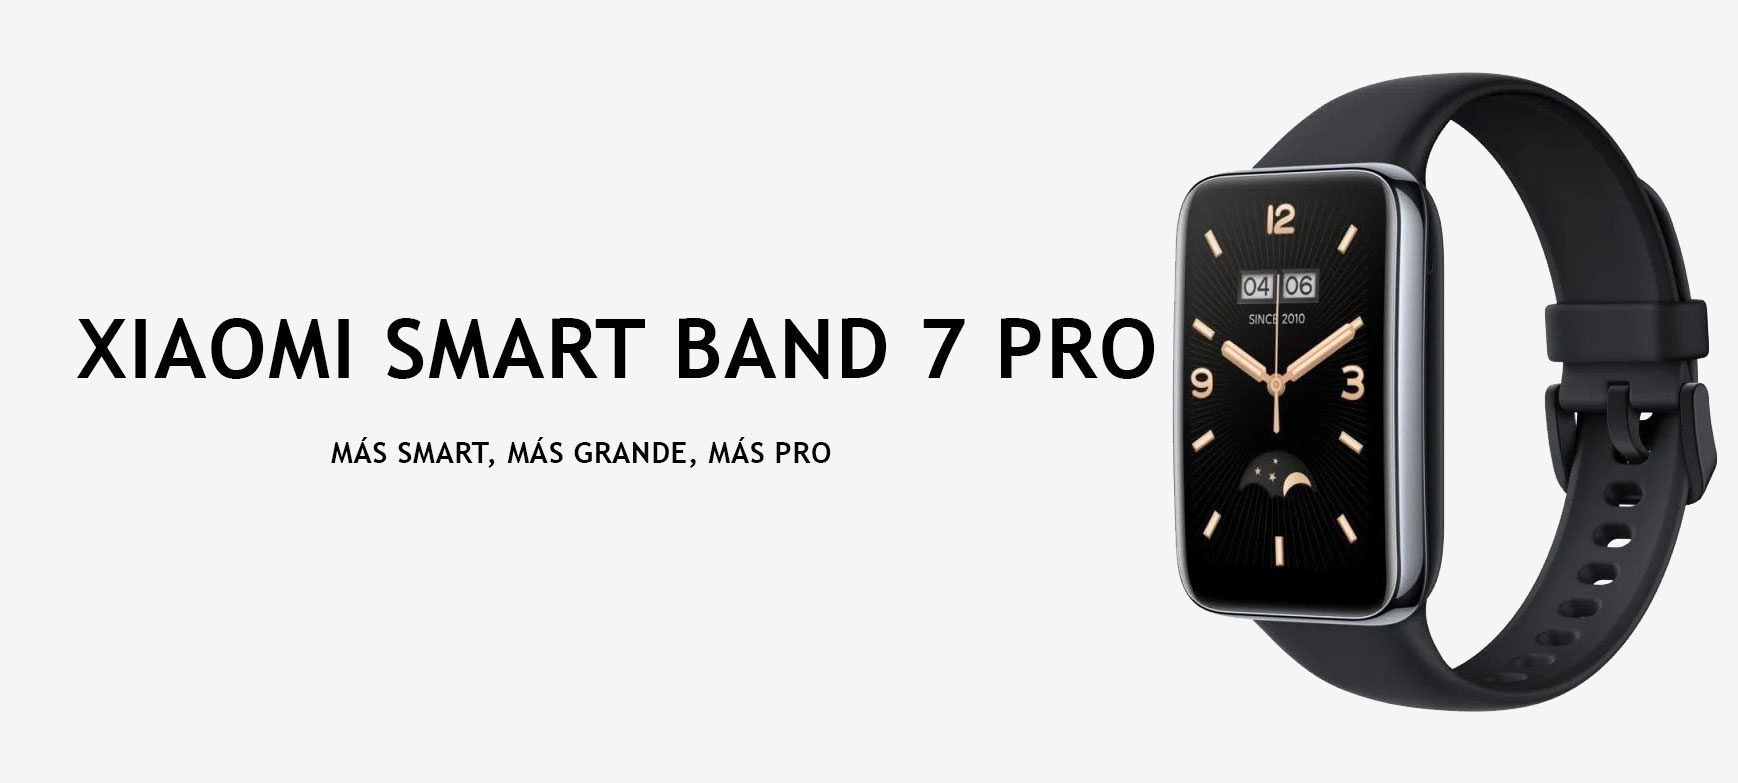 Smart Band 7 Pro Xiaomi – Review